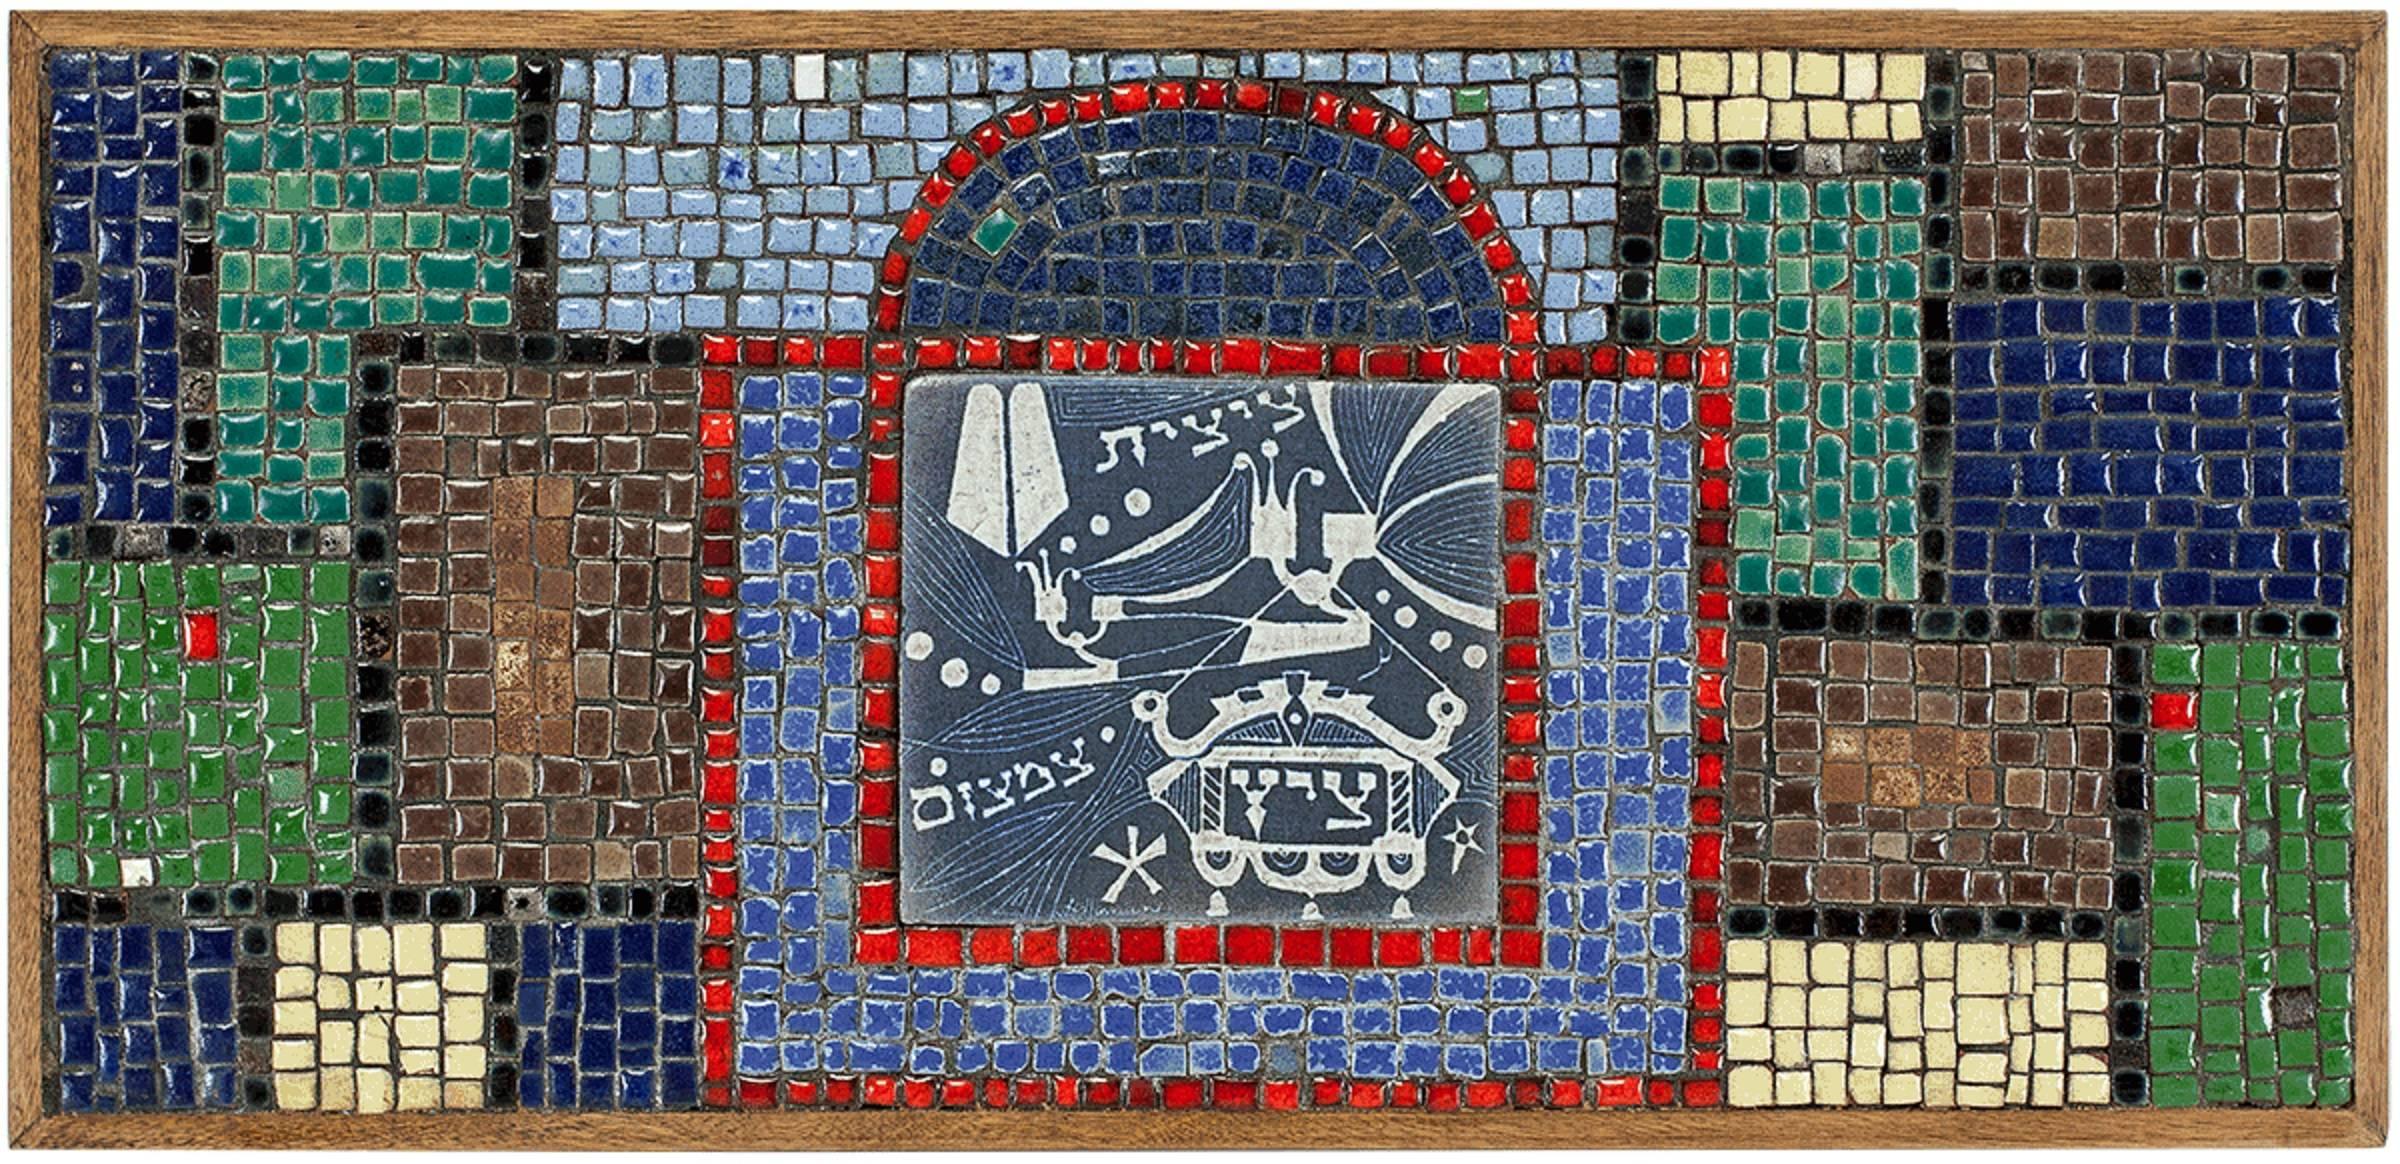 Rare Vintage Judaica Tile Mosaic with Sgraffito Hebrew Calligraphy - Mixed Media Art by David Holleman